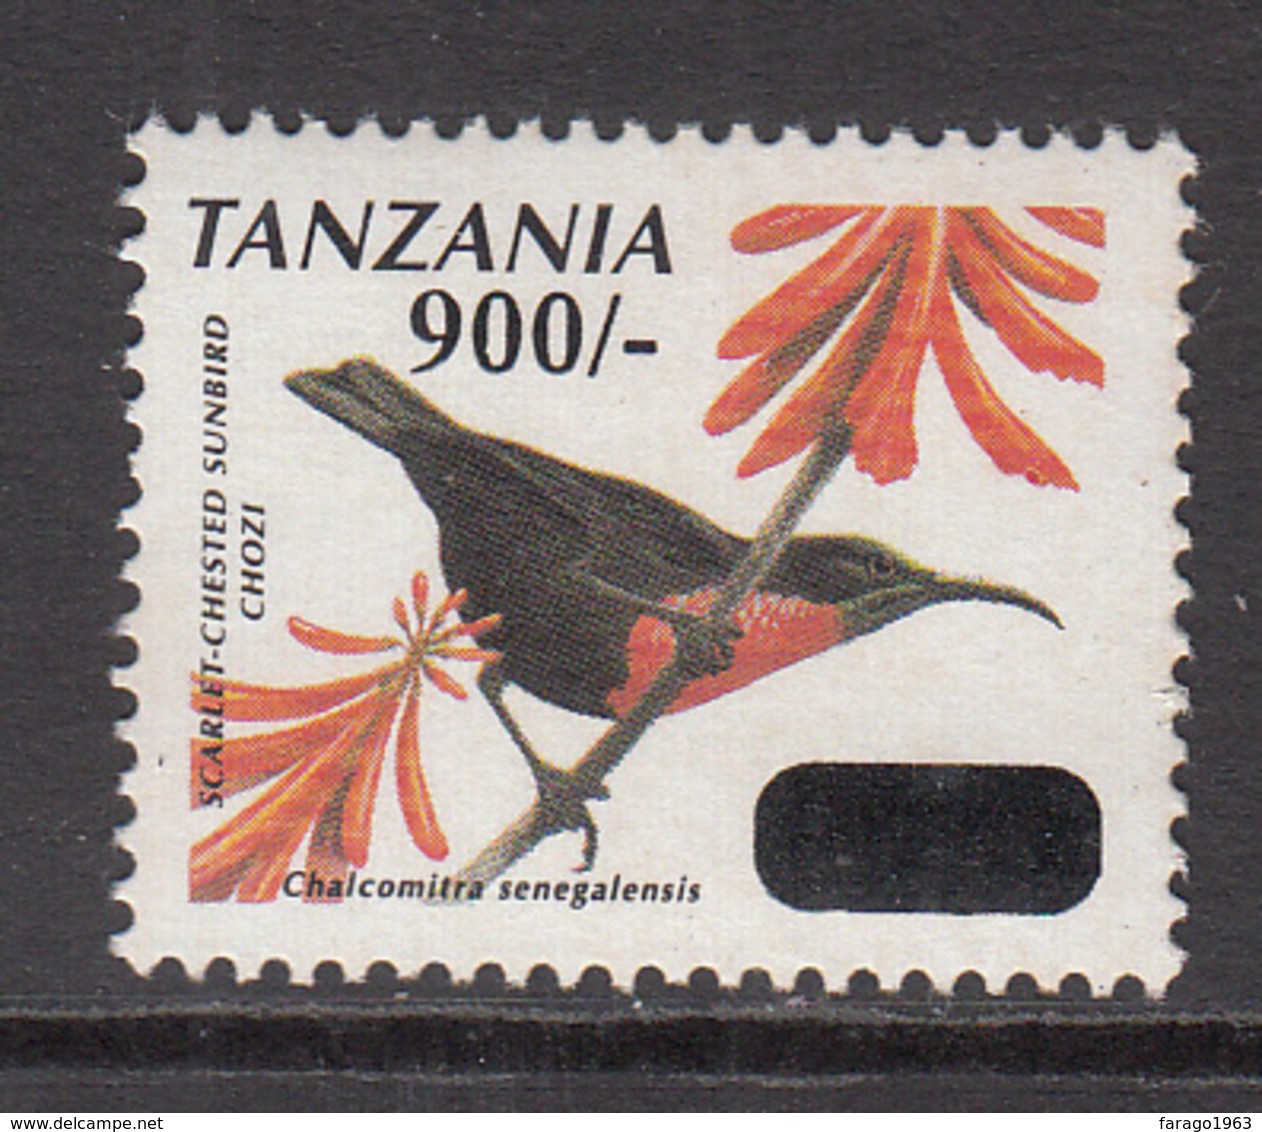 2011 Tanzania 900/- Overprint On Bird Definitives  Oiseaux  Complete Set Of 2 MNH - Tanzania (1964-...)